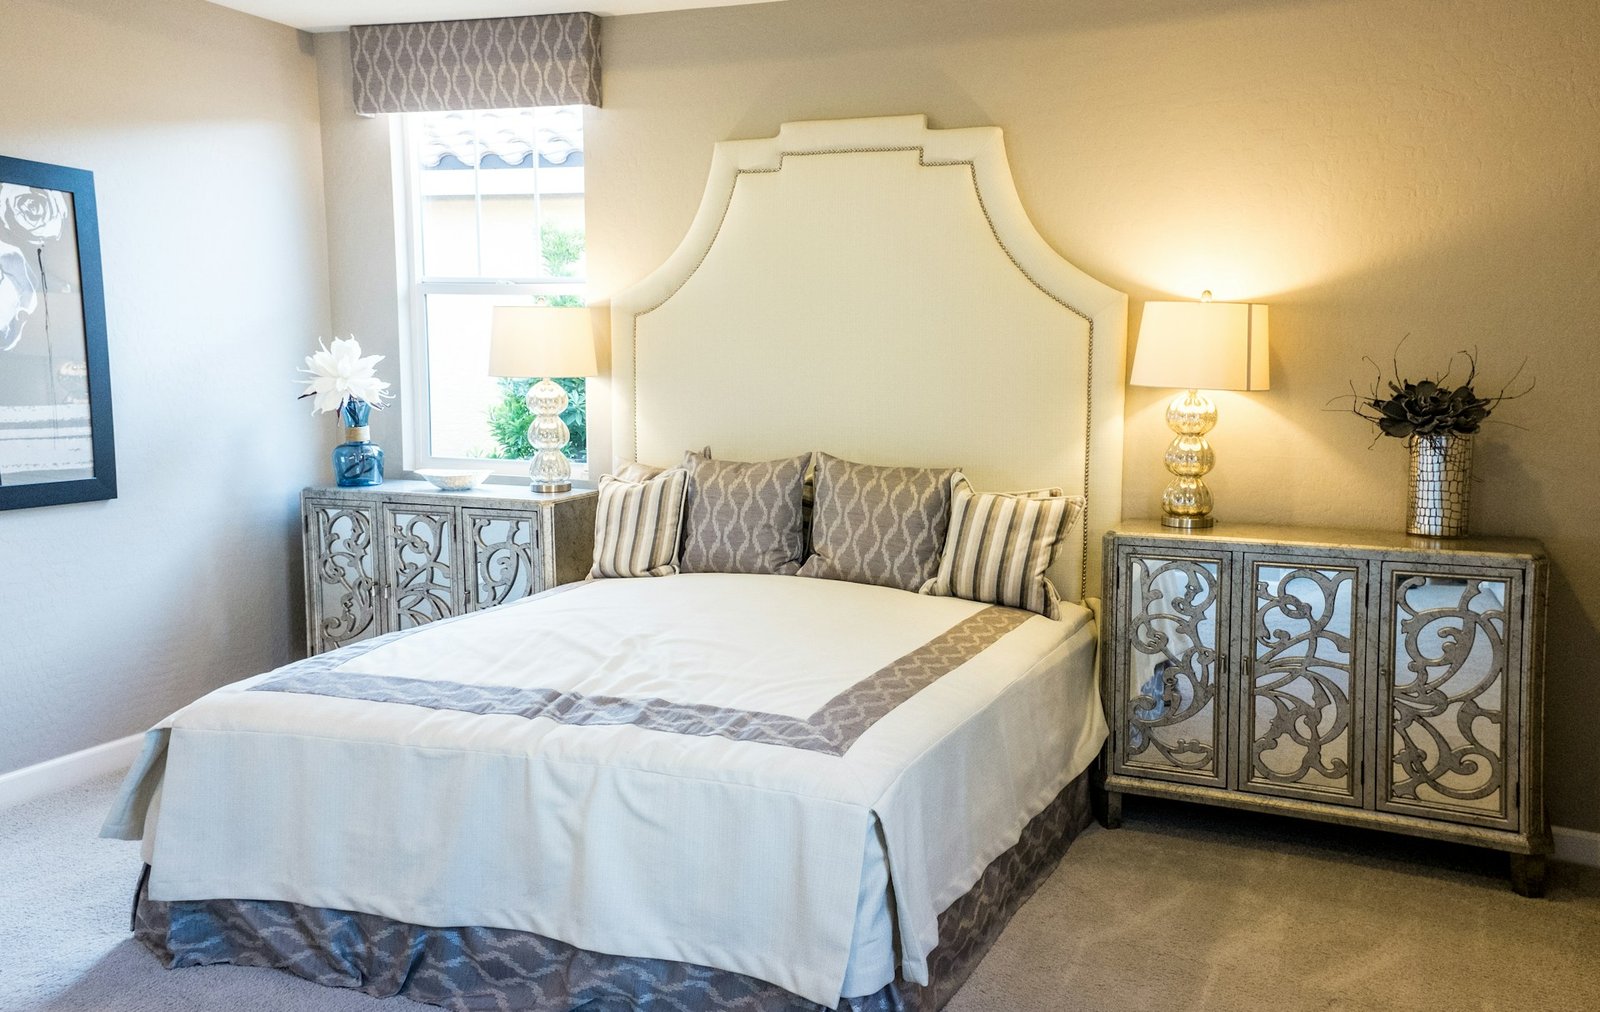 Gallery of inspirational luxury master bedroom photos